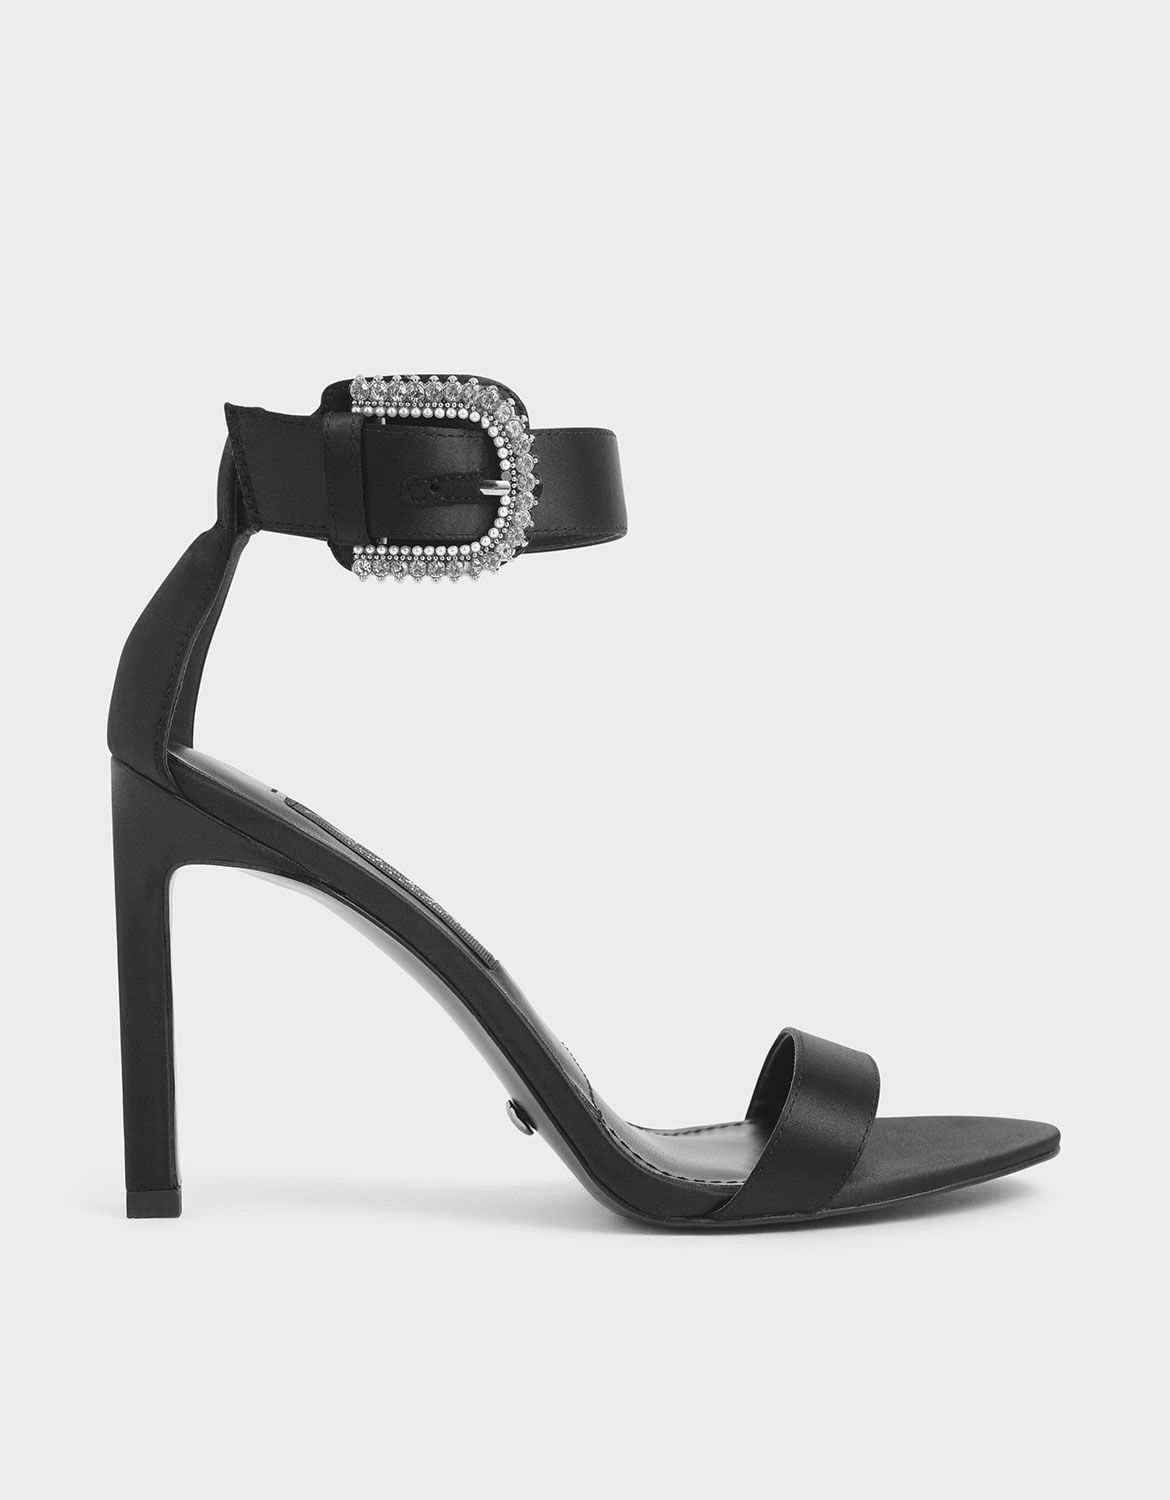 embellished stiletto heels